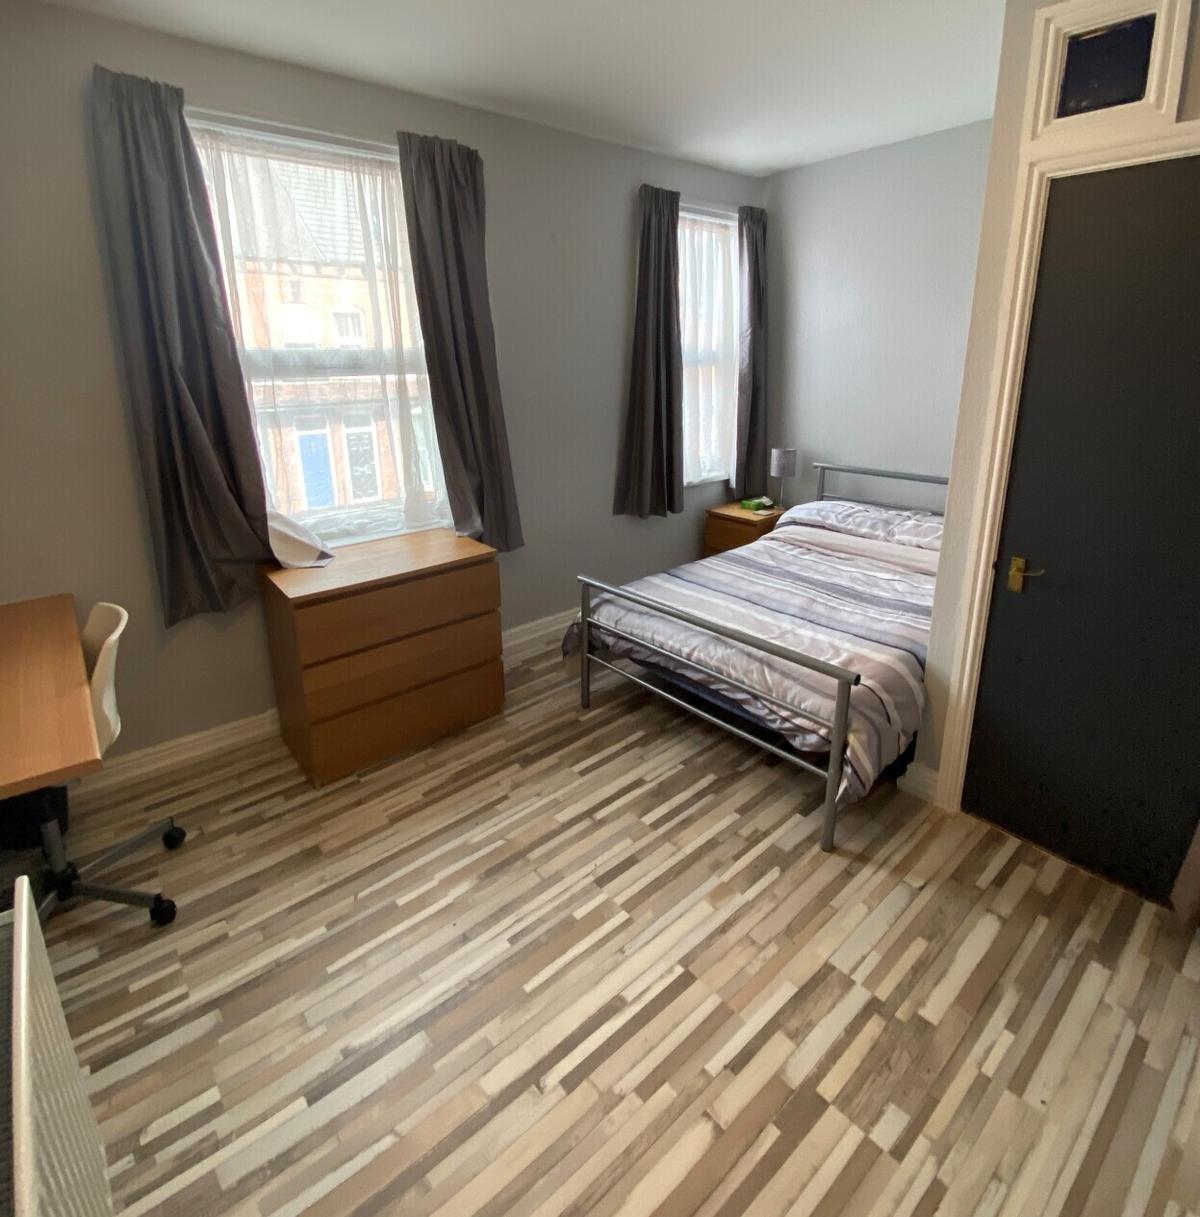 5 bedroom house for rent Hessle Place, Leeds, LS6 1EU | UniHomes